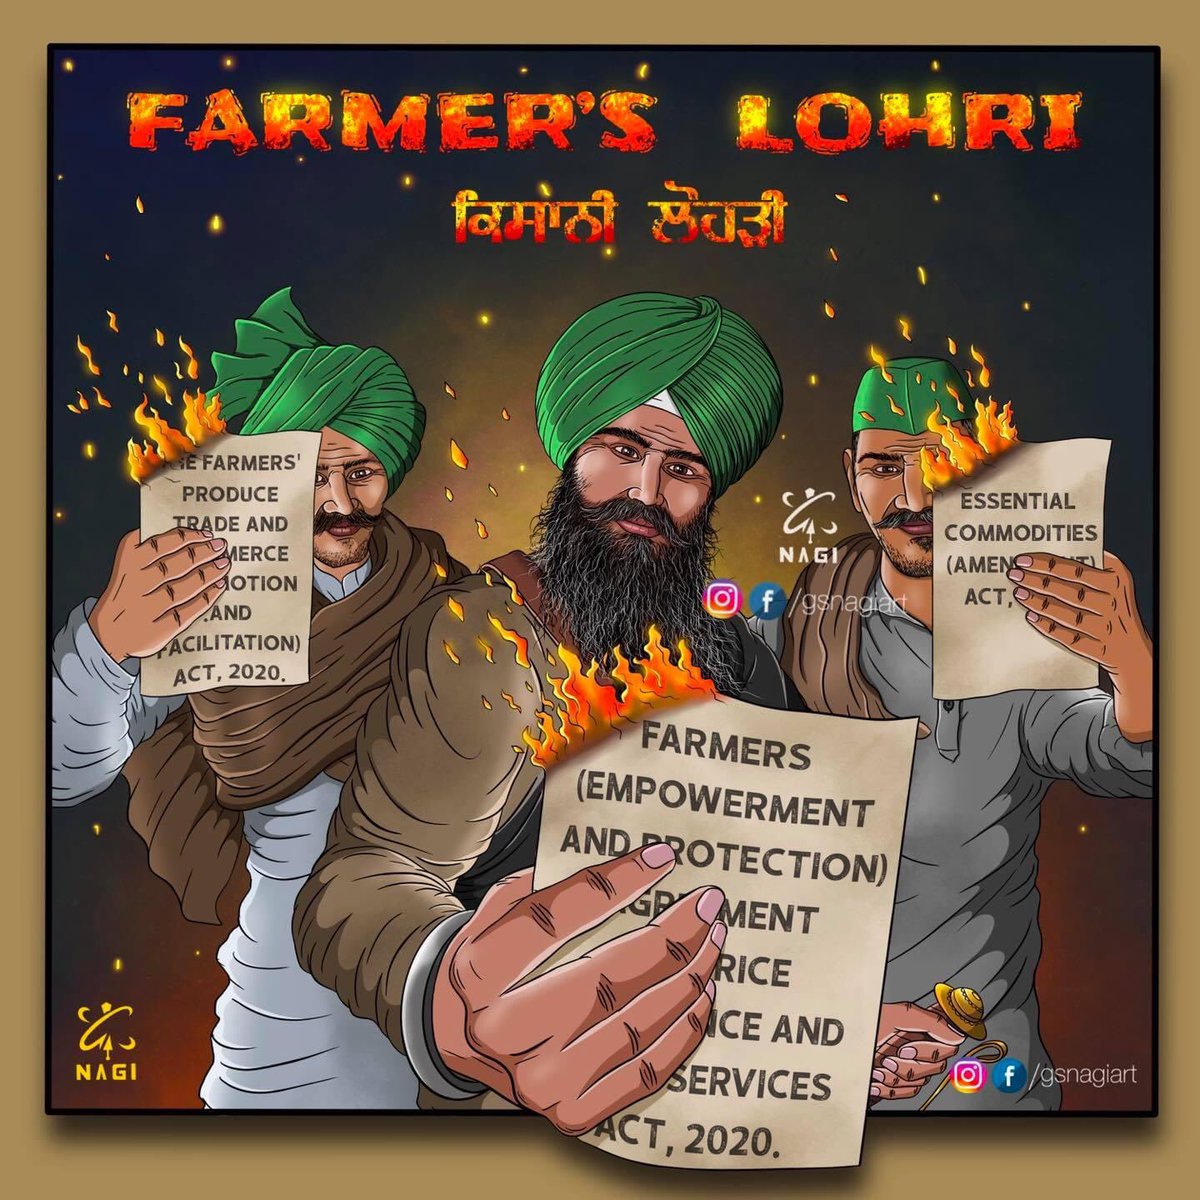 This artwork dedicated to our Farmers on this holly festival Lohri of Punjab.#kisanmajdooriktazindabad #farmersprotest #farmers #lohriwithfarmers #punjab #haryana #art #digitalart  #punjabfestival #repealblacklaws #sikh #sikhism #khalsaaid #khalsa
 #BurnFarmLawsOnLohri